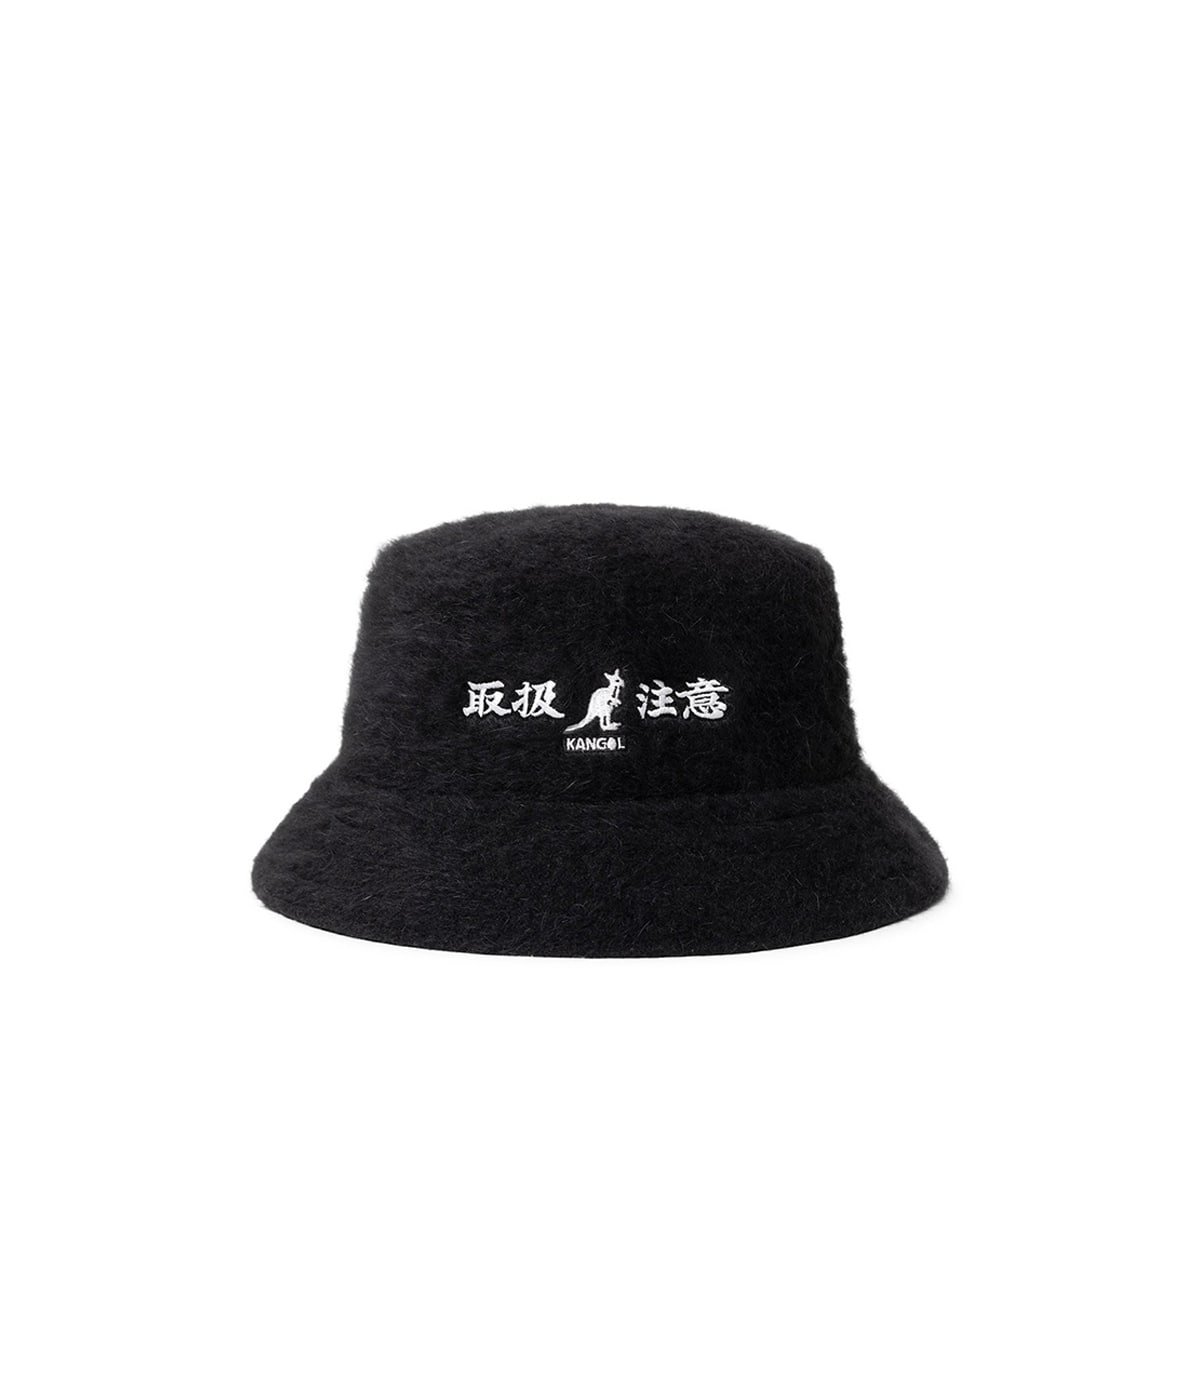 THE BLACK EYE PATCH ブラックアイパッチ バケットハット - 帽子